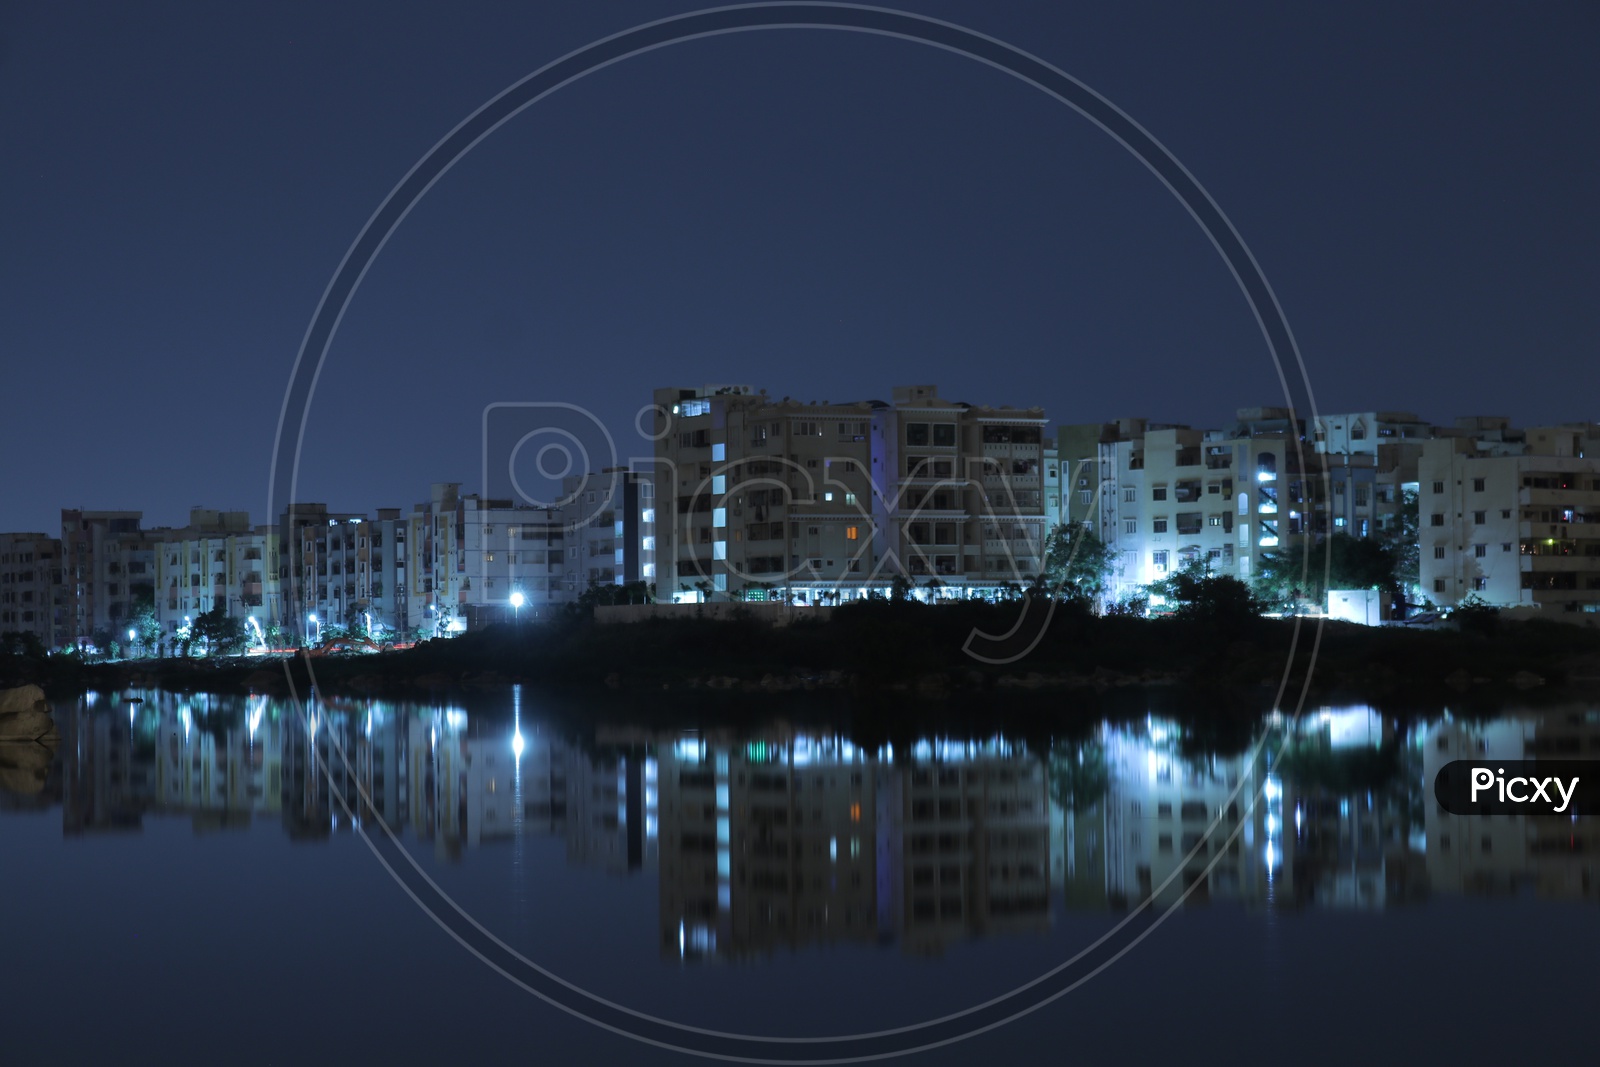 Reflections of buildings at Pragathi Nagar lake